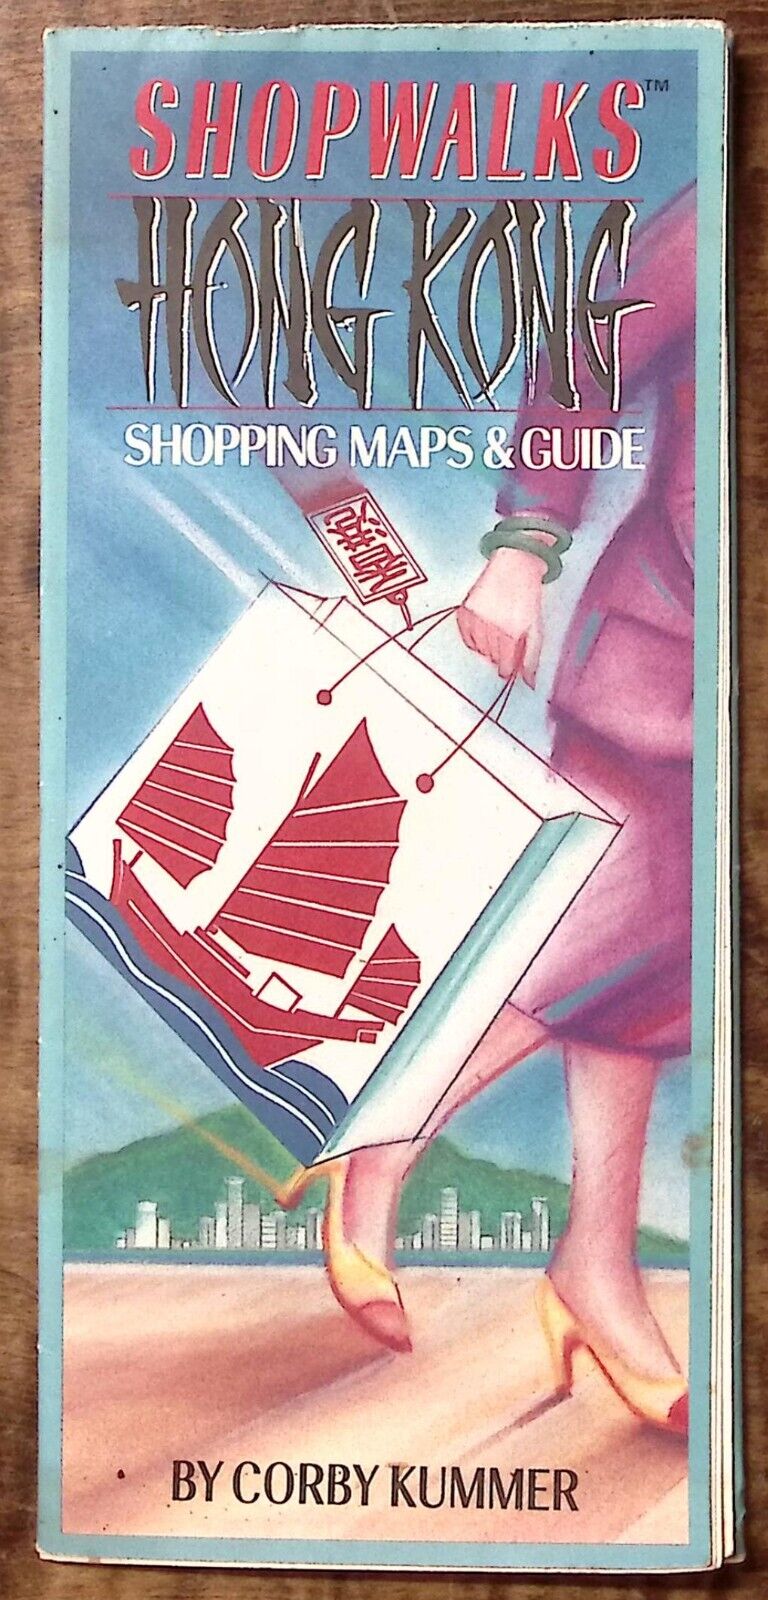 1986 SHOPWALKS HONG KONG SHOPPING MAPS & GUIDE BY CORBY KUMMER FOLD-OUT Z5370